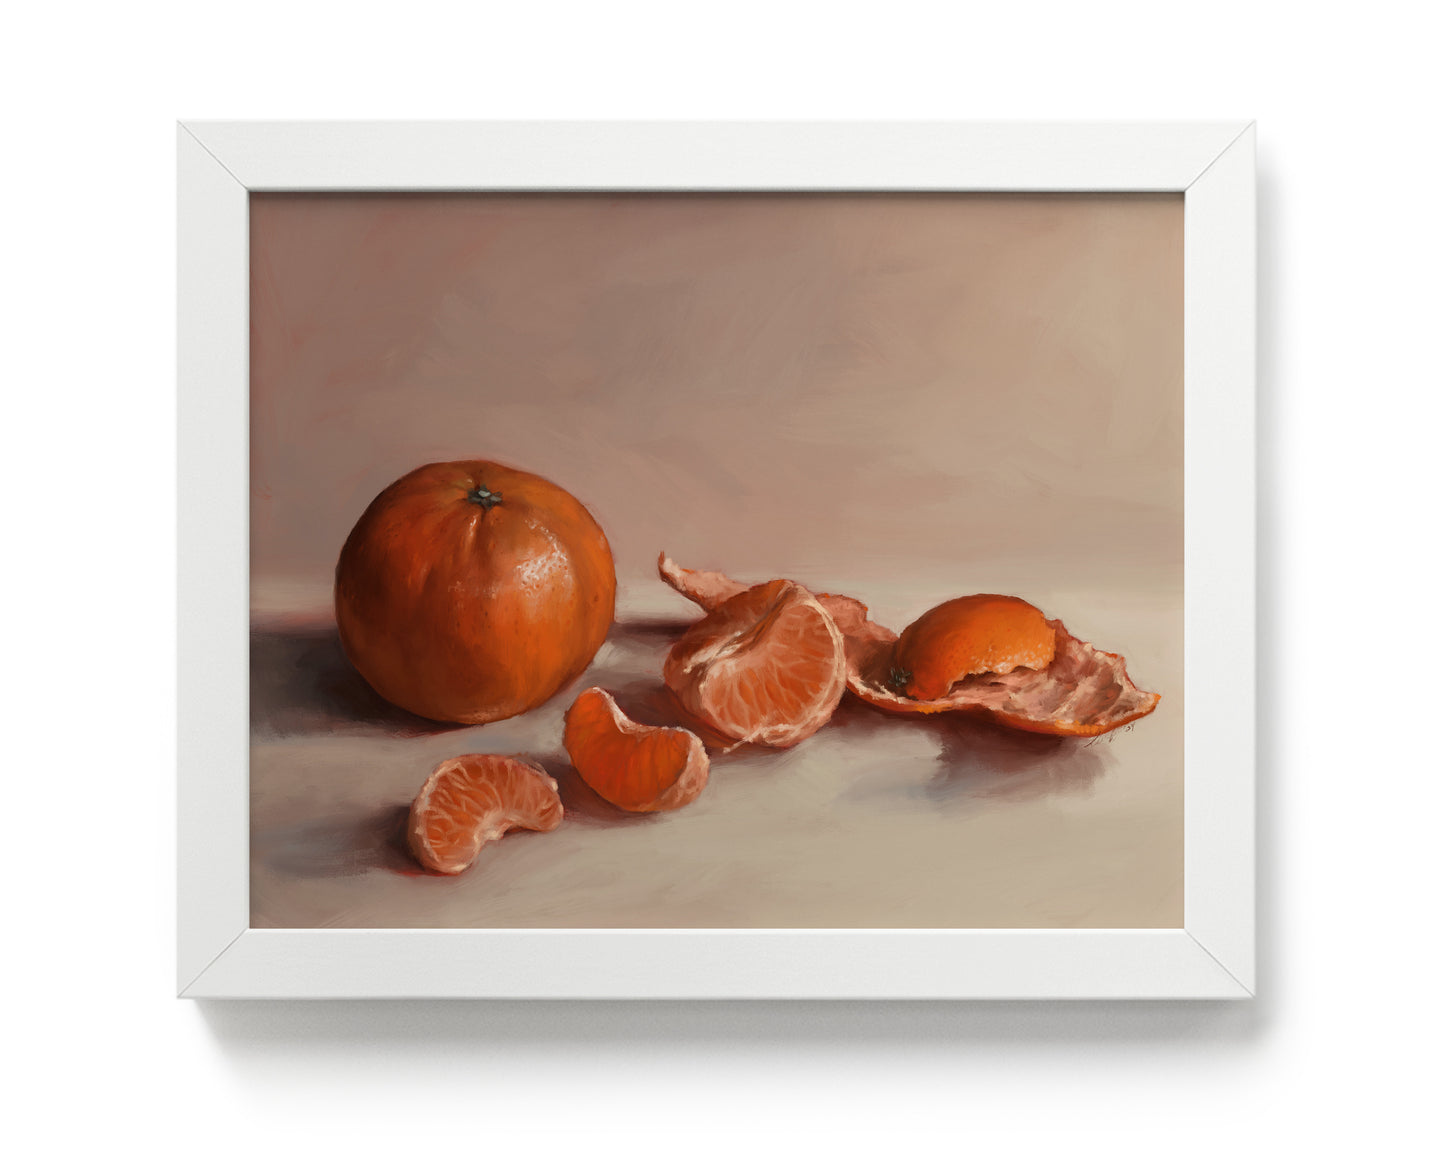 "Clementines" by Catherine Hébert - Clementine Orange Still Life Art Print - 8"x10" size